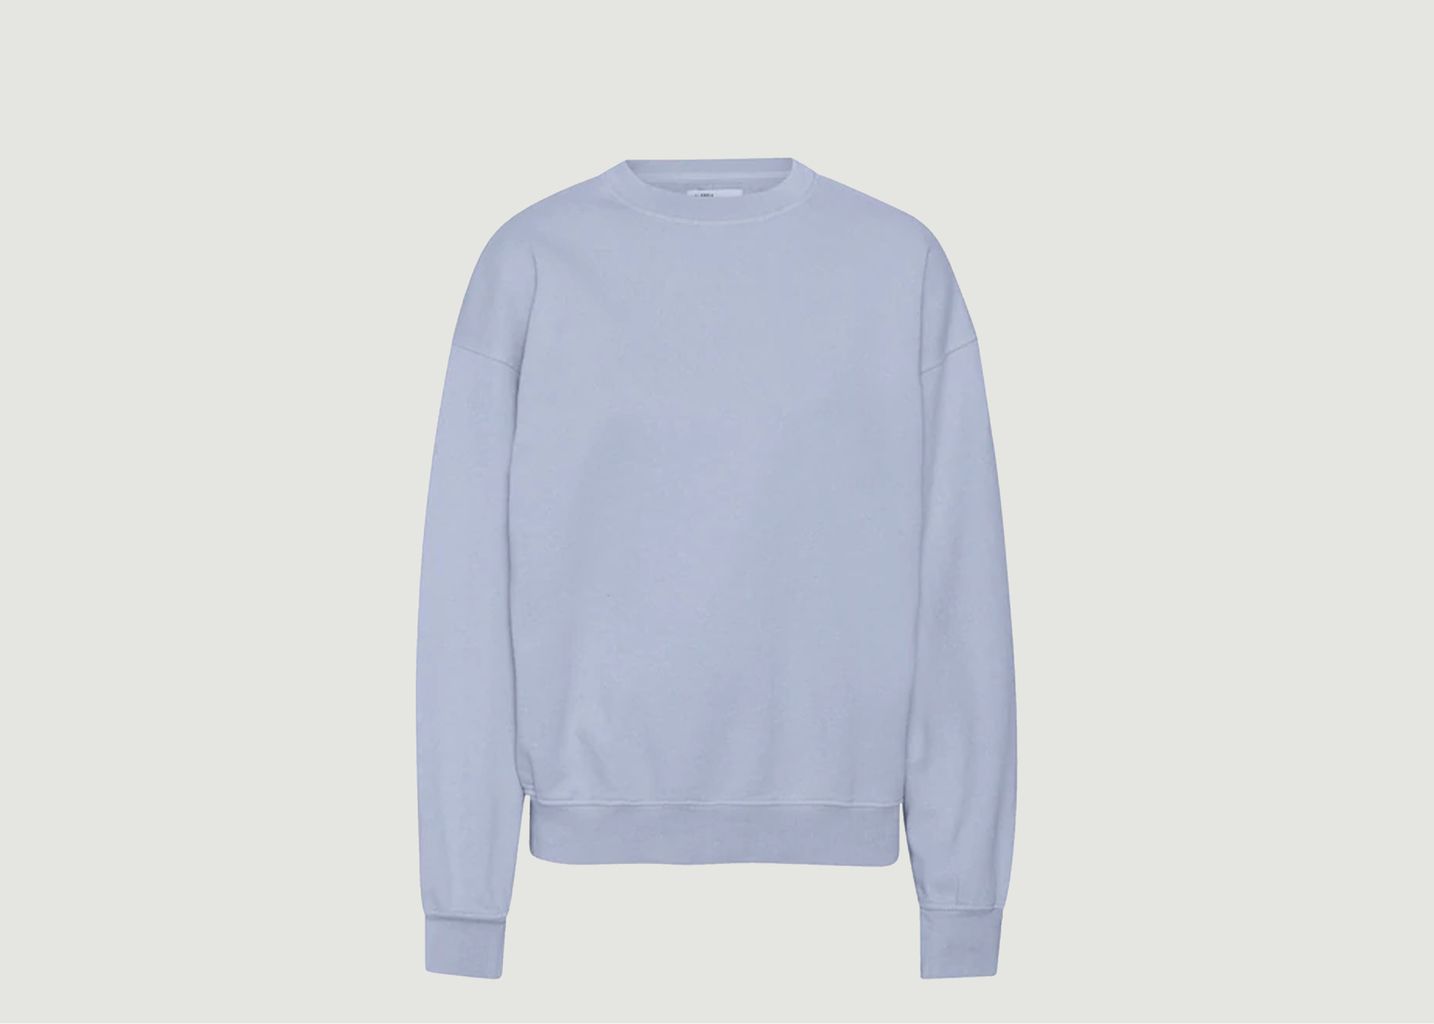 Colorful Standard Blue Classic Powder Sweatshirt